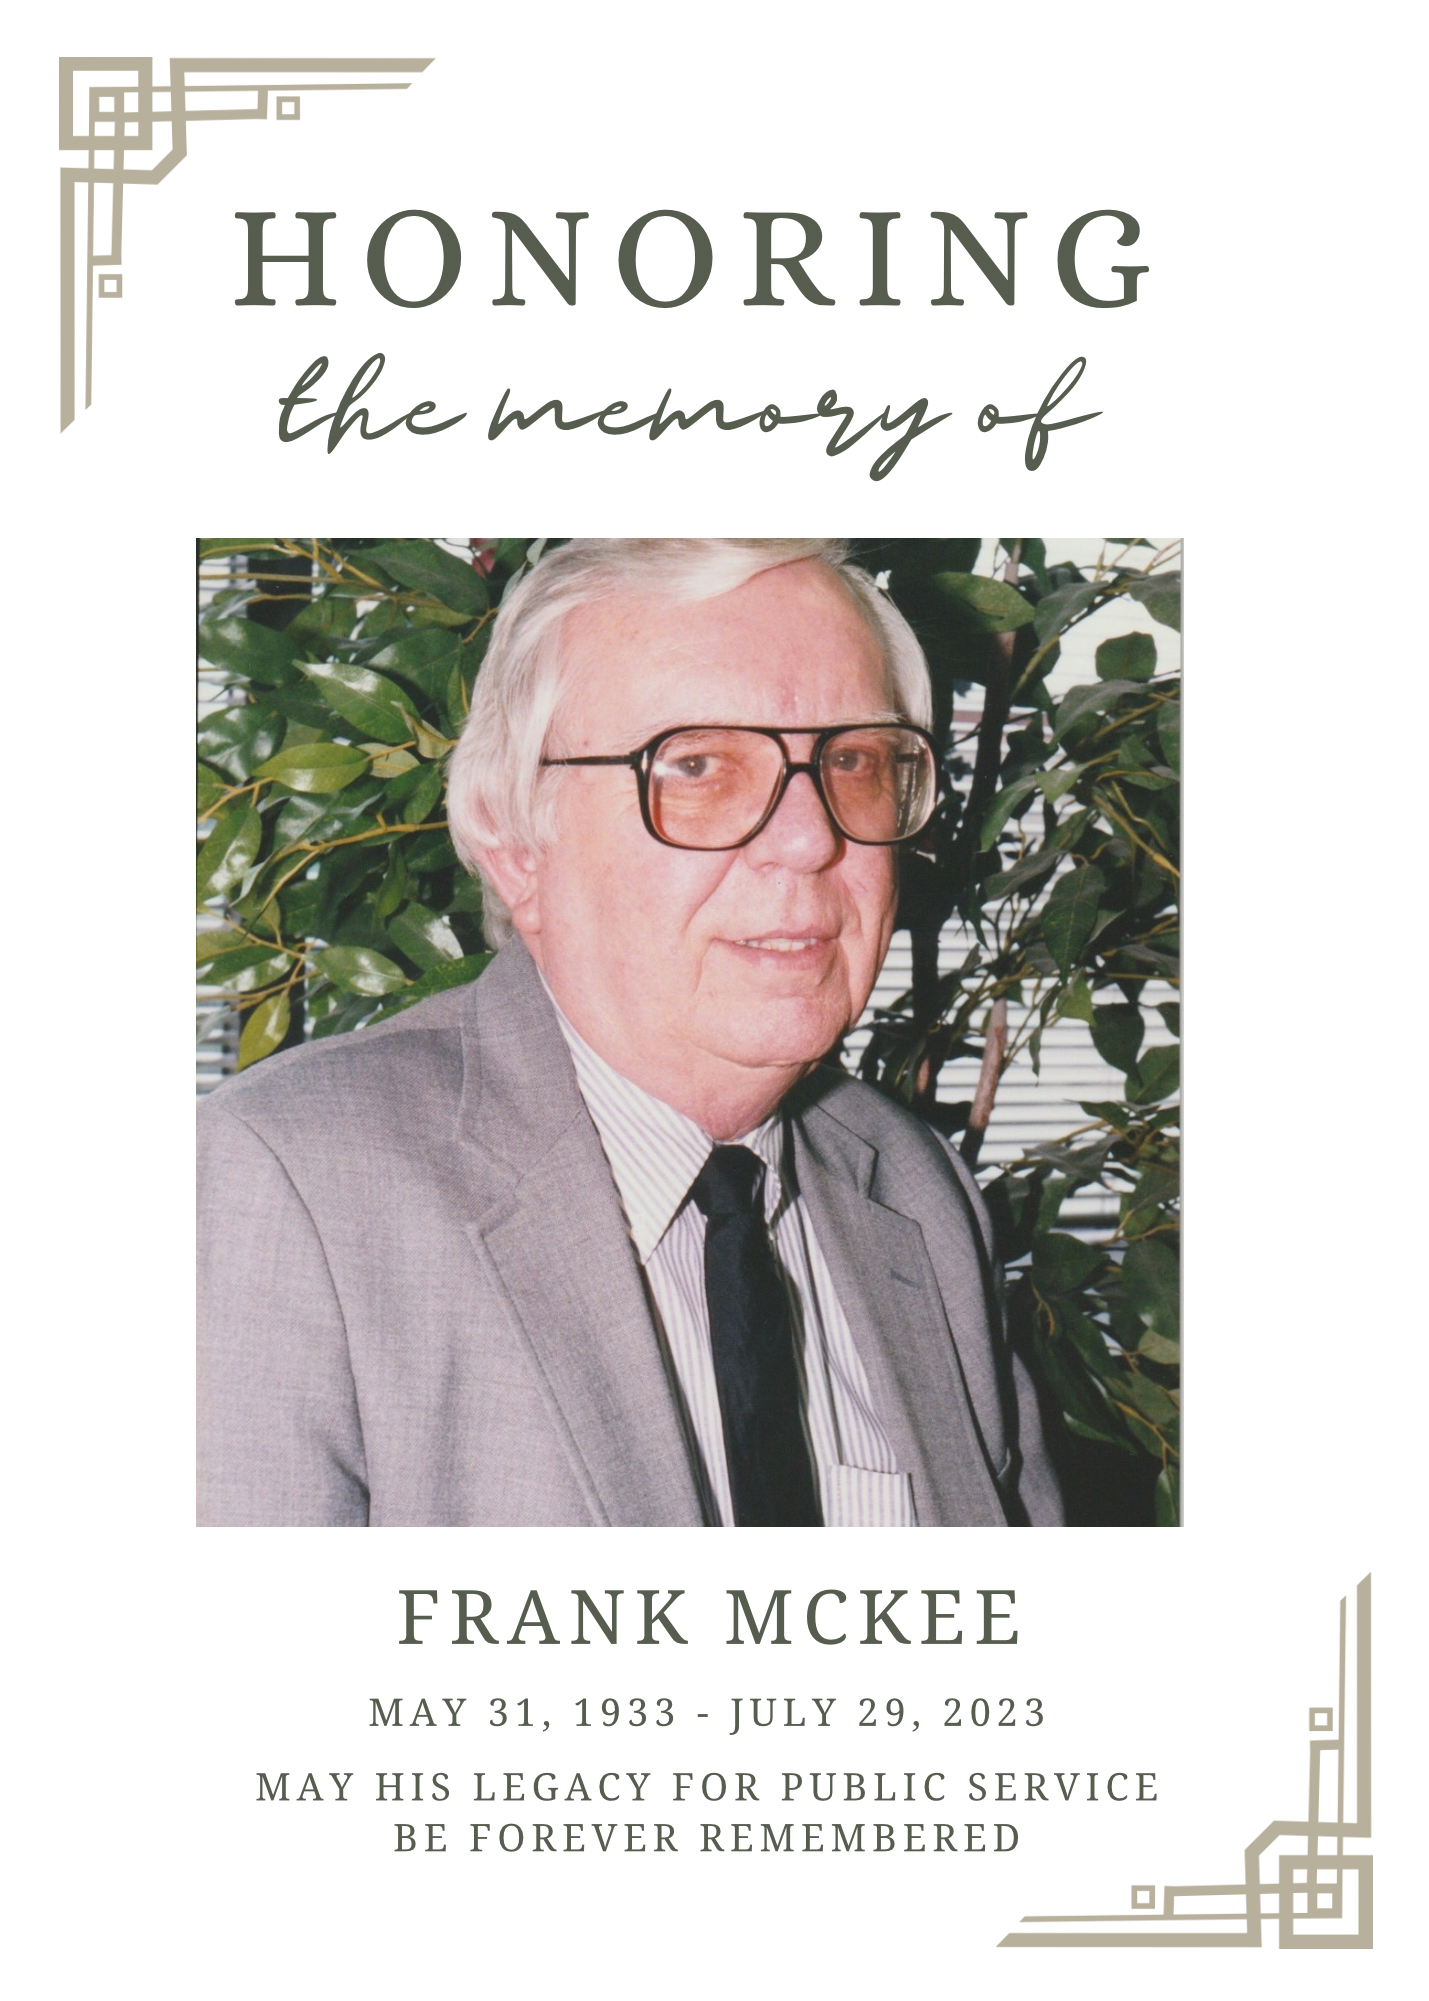 Photo of Frank McKee